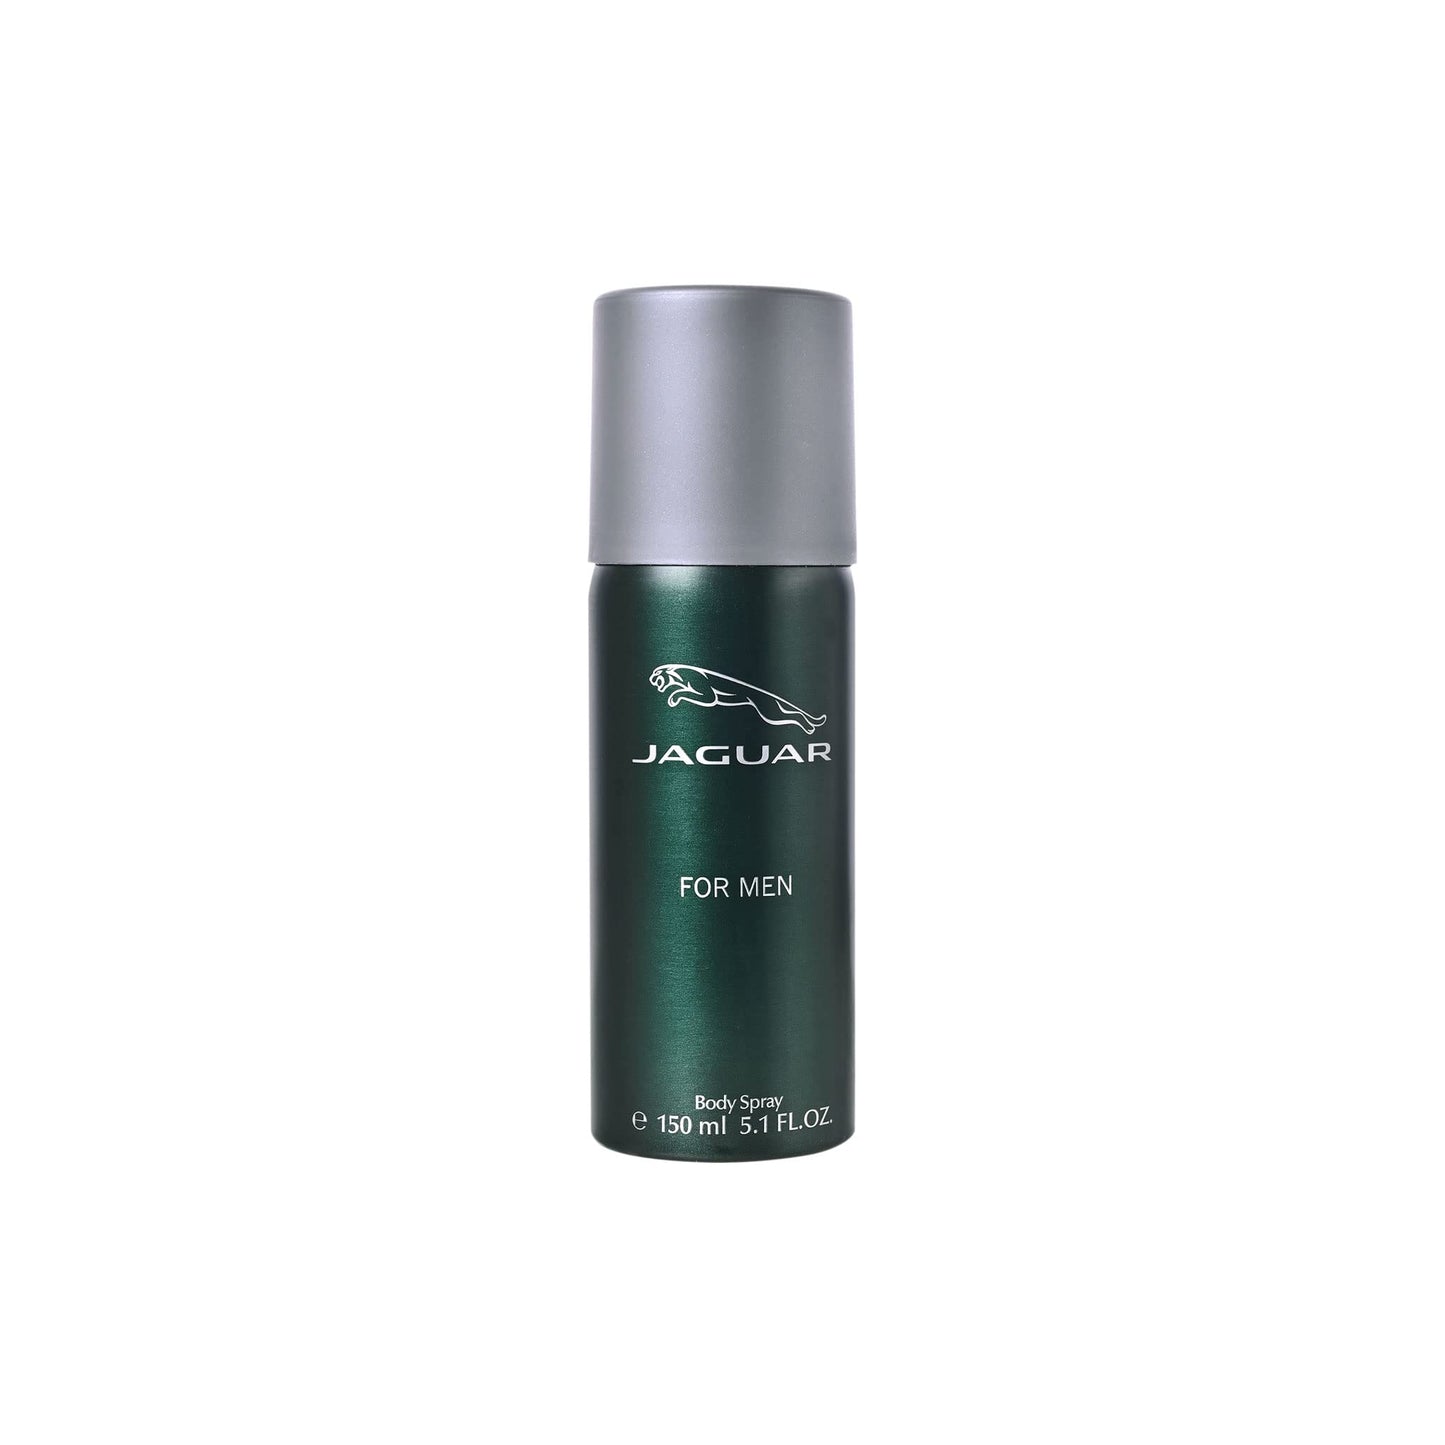 Jaguar Deodorant Body Spray for Men, Green, 150 ml  from JAGUAR